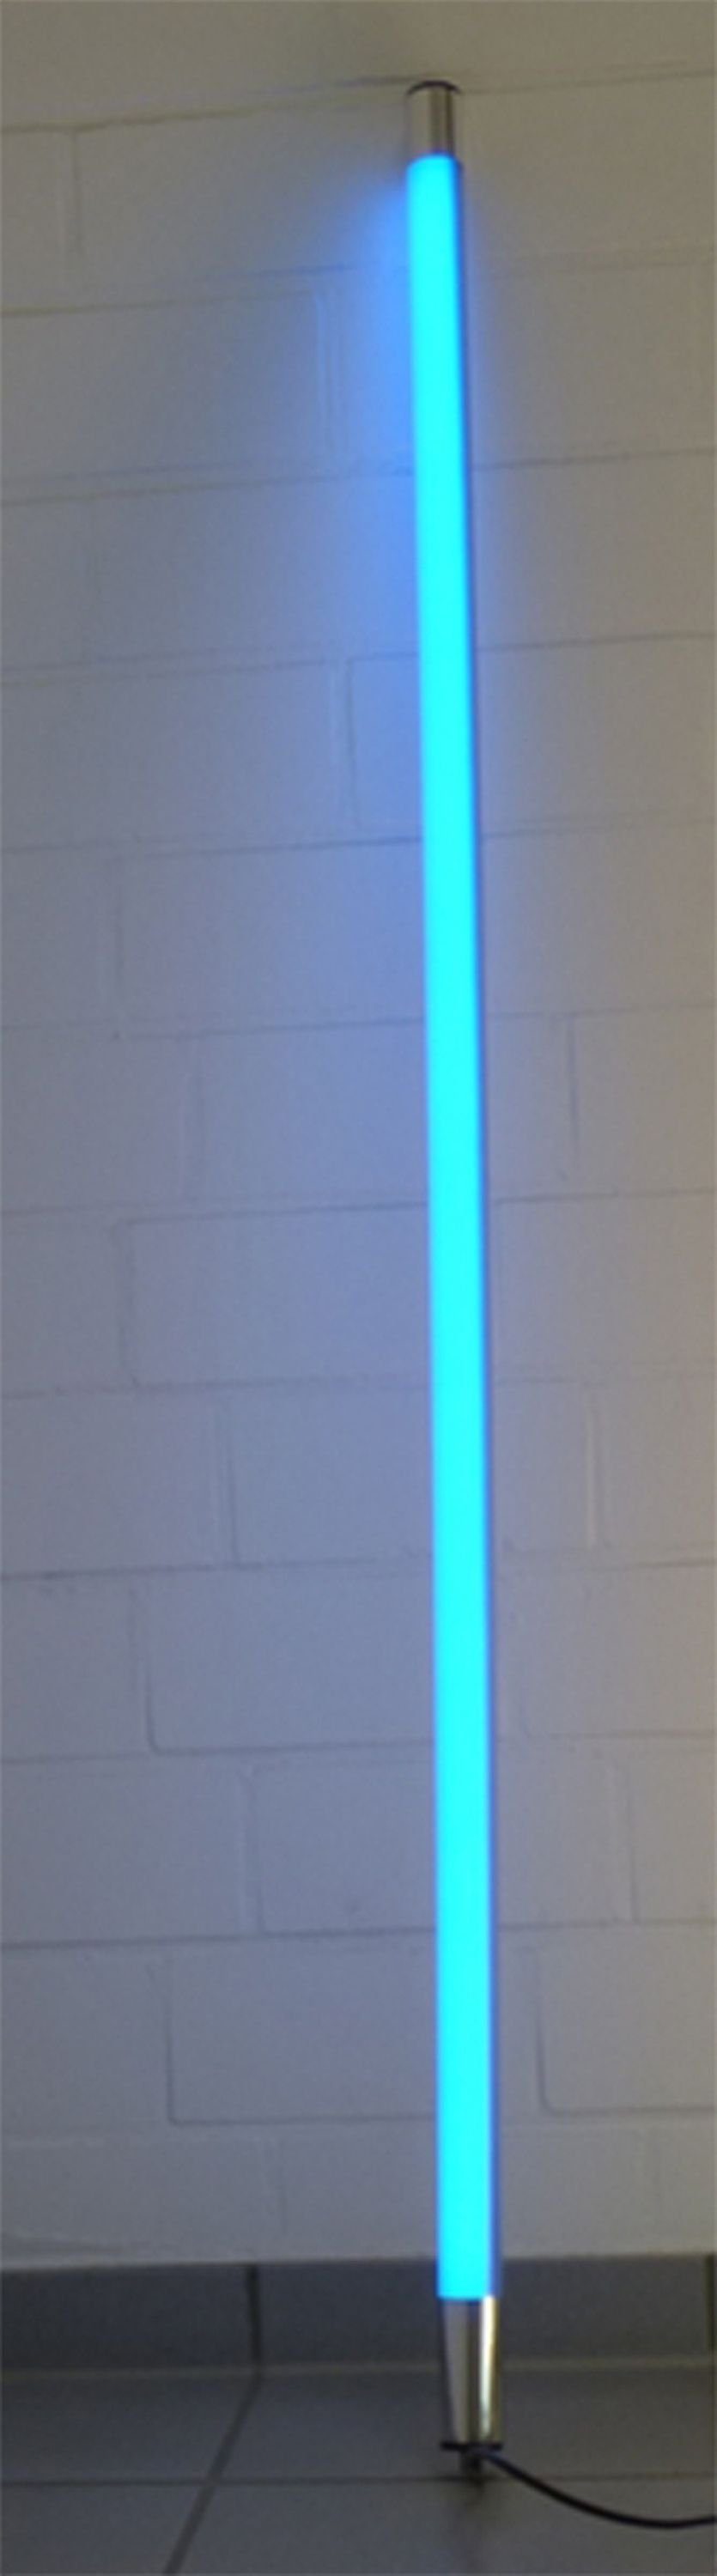 XENON LED Wandleuchte 8011 LED Leuchtstab Satiniert 1,23m Länge 2000 Lumen IP44 Außen Blau, LED Röhre T8, Xenon Blau